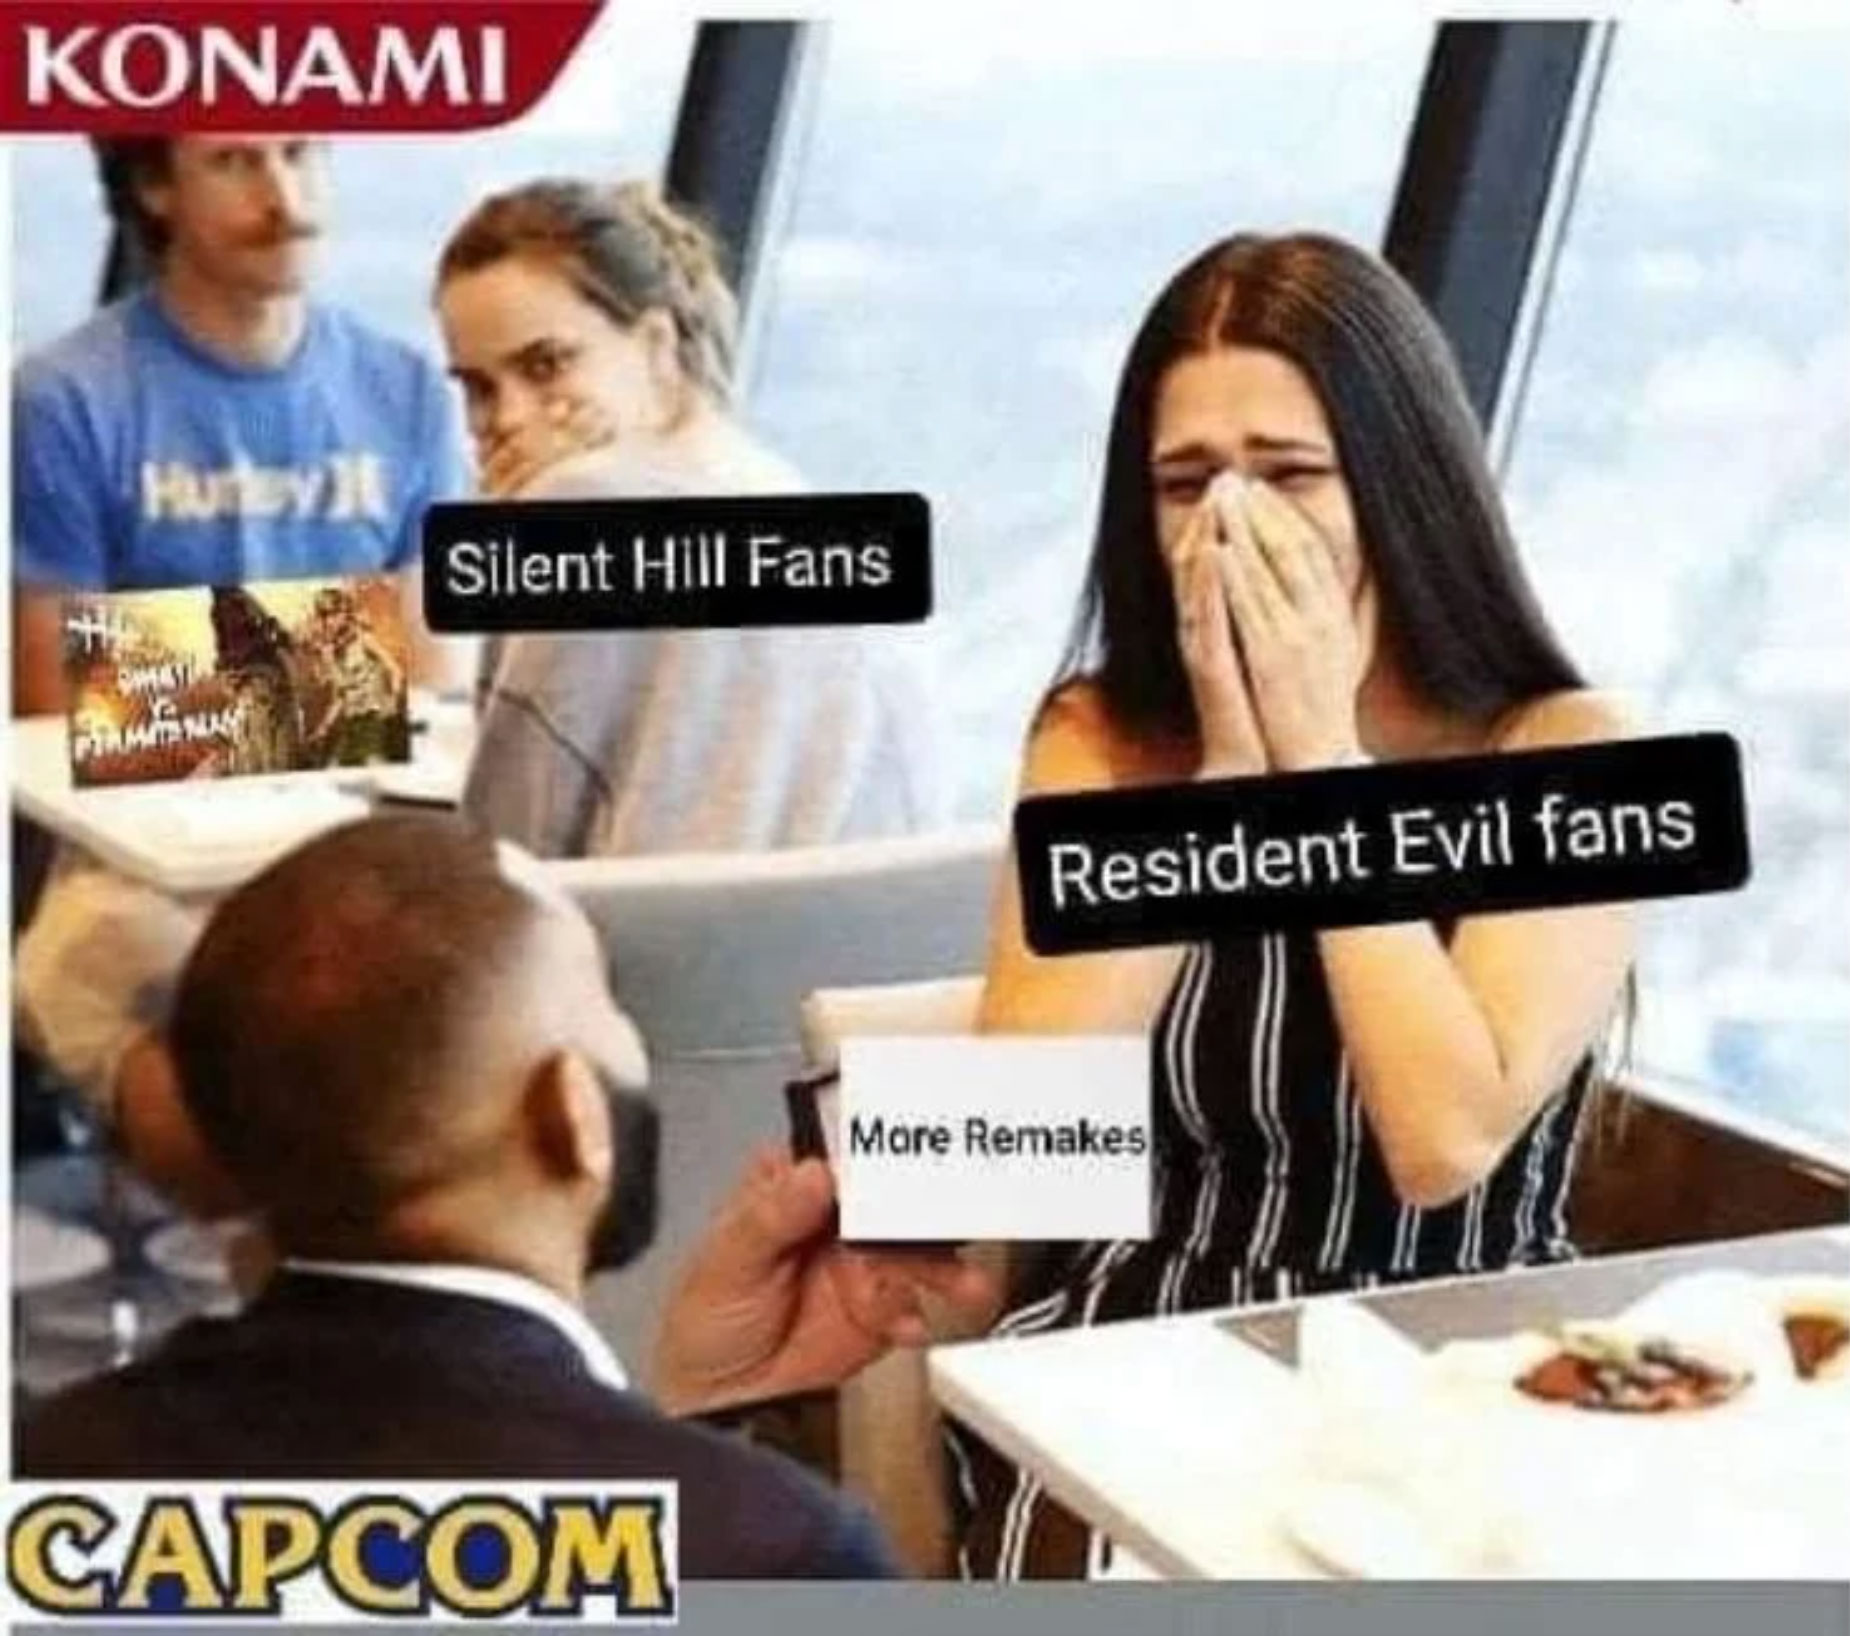 funny gaming memes - capcom resident evil konami silent hill meme - Konami Silent Hill Fans Om Resident Evil fans More Remakes Capcom